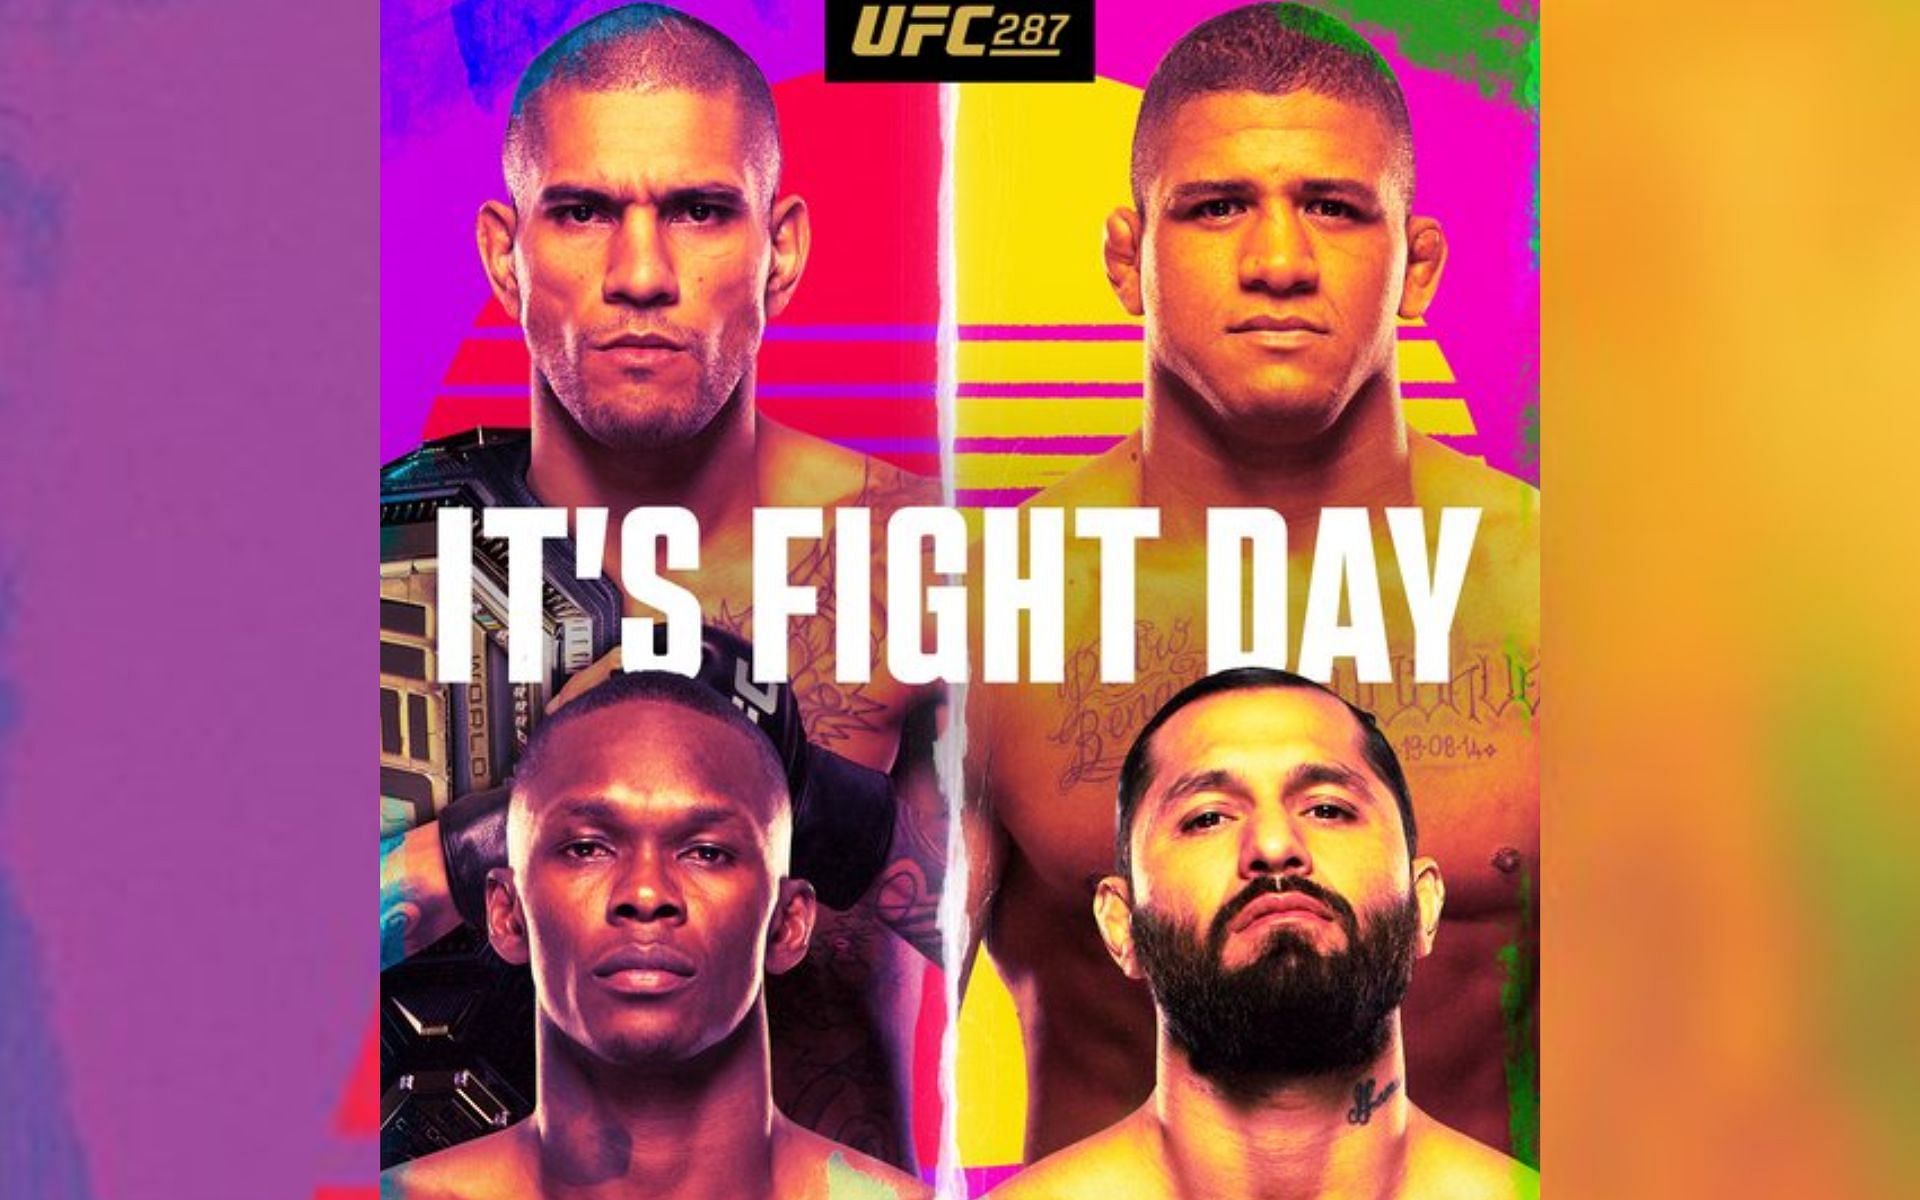 UFC 287 poster [Image courtesy: @ufceurope on Twitter]